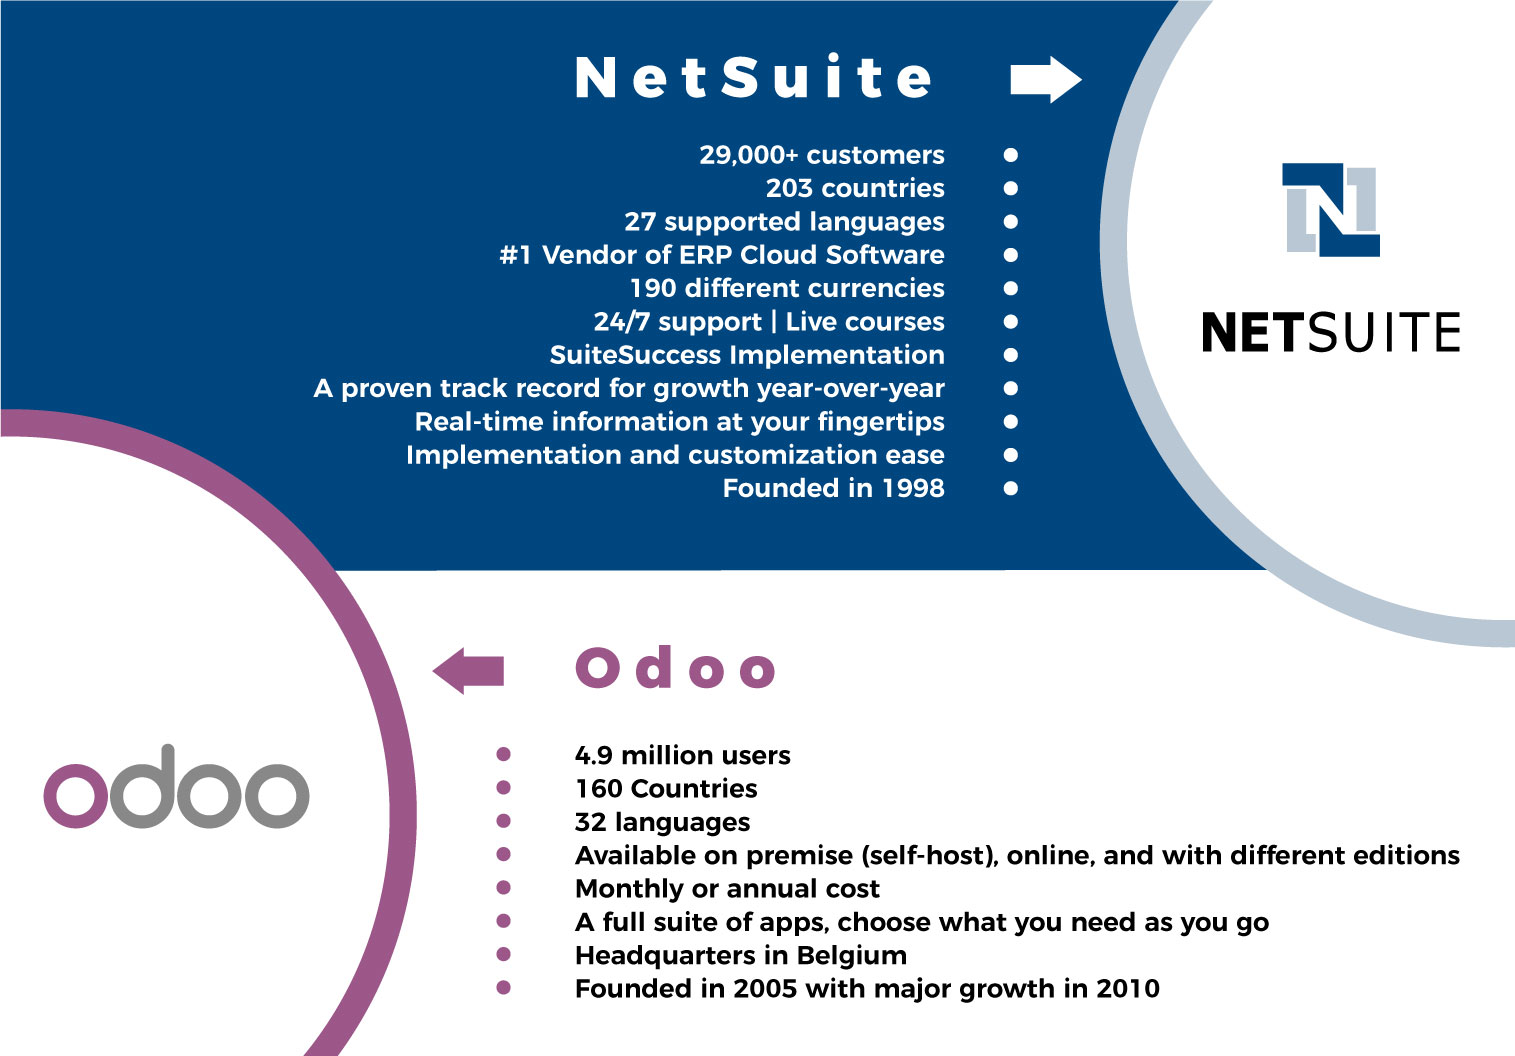 Image shows comparison of NetSuite vs Odoo